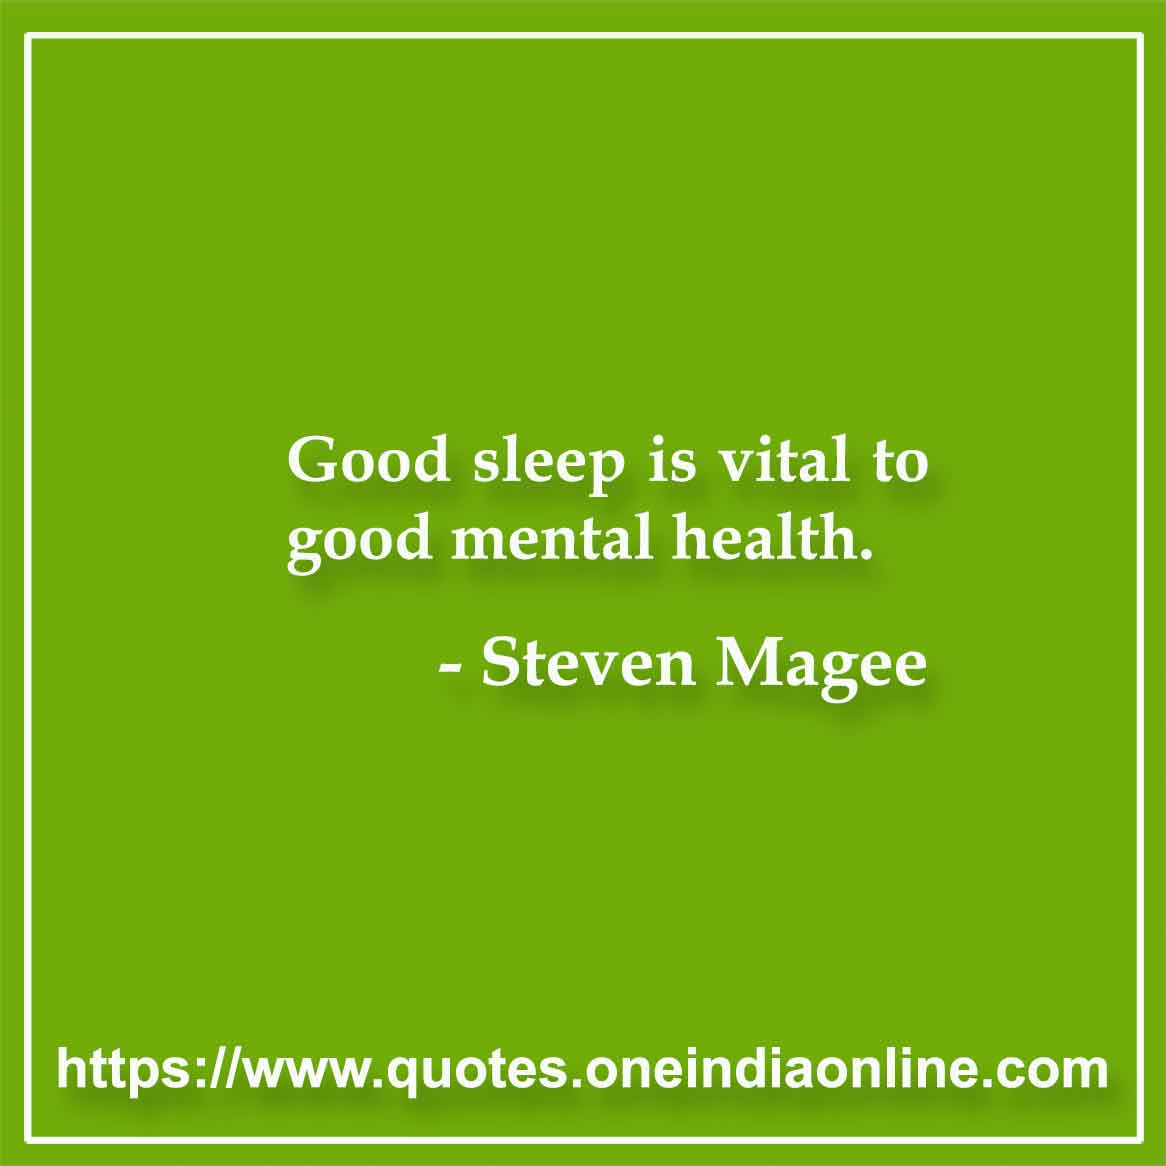 Good sleep is vital to good mental health.

- Steven Magee